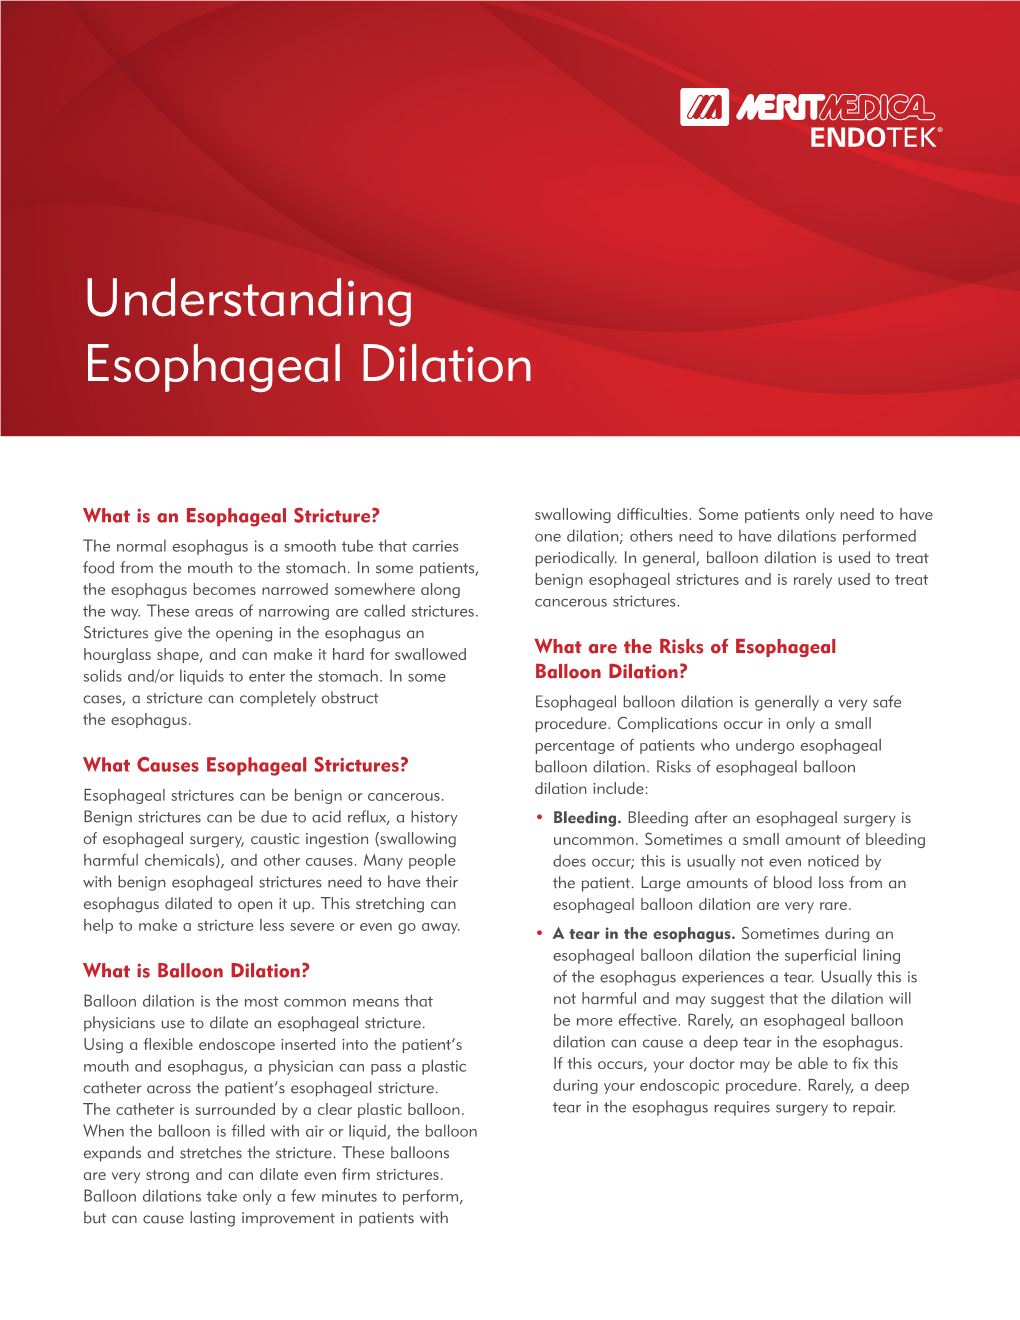 Understanding Esophageal Dilation